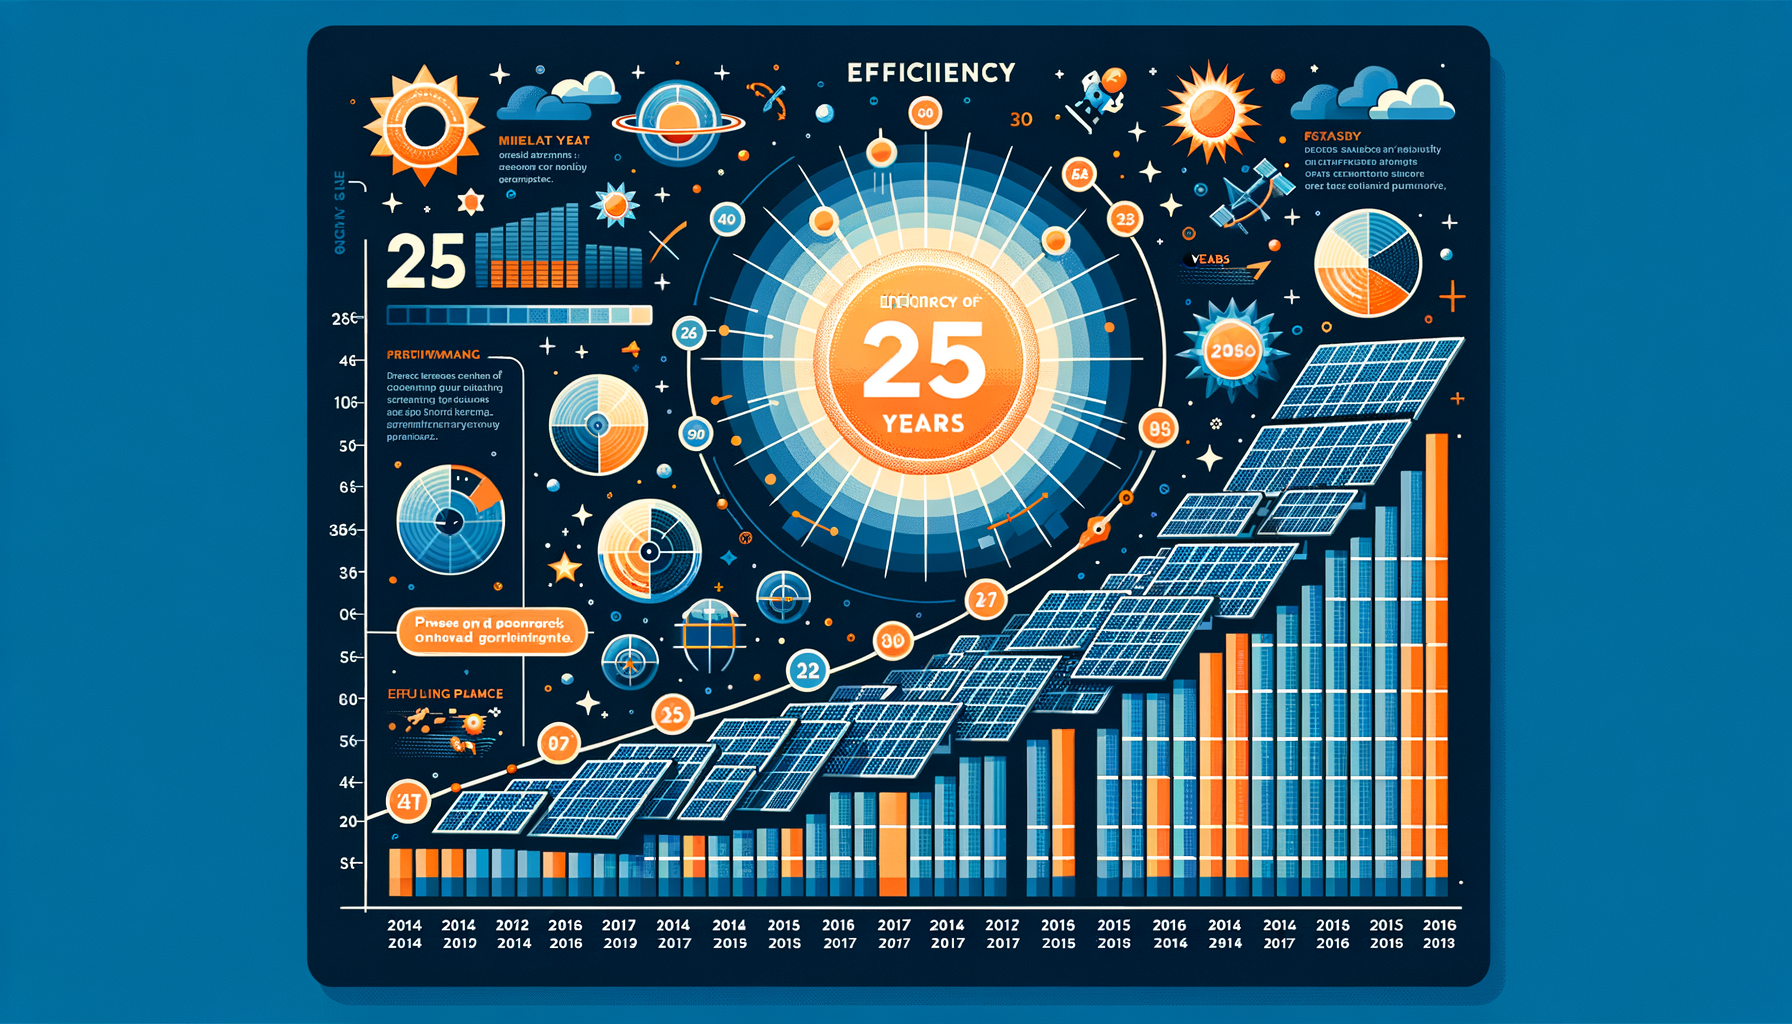 ALT: Solar panel efficiency over years